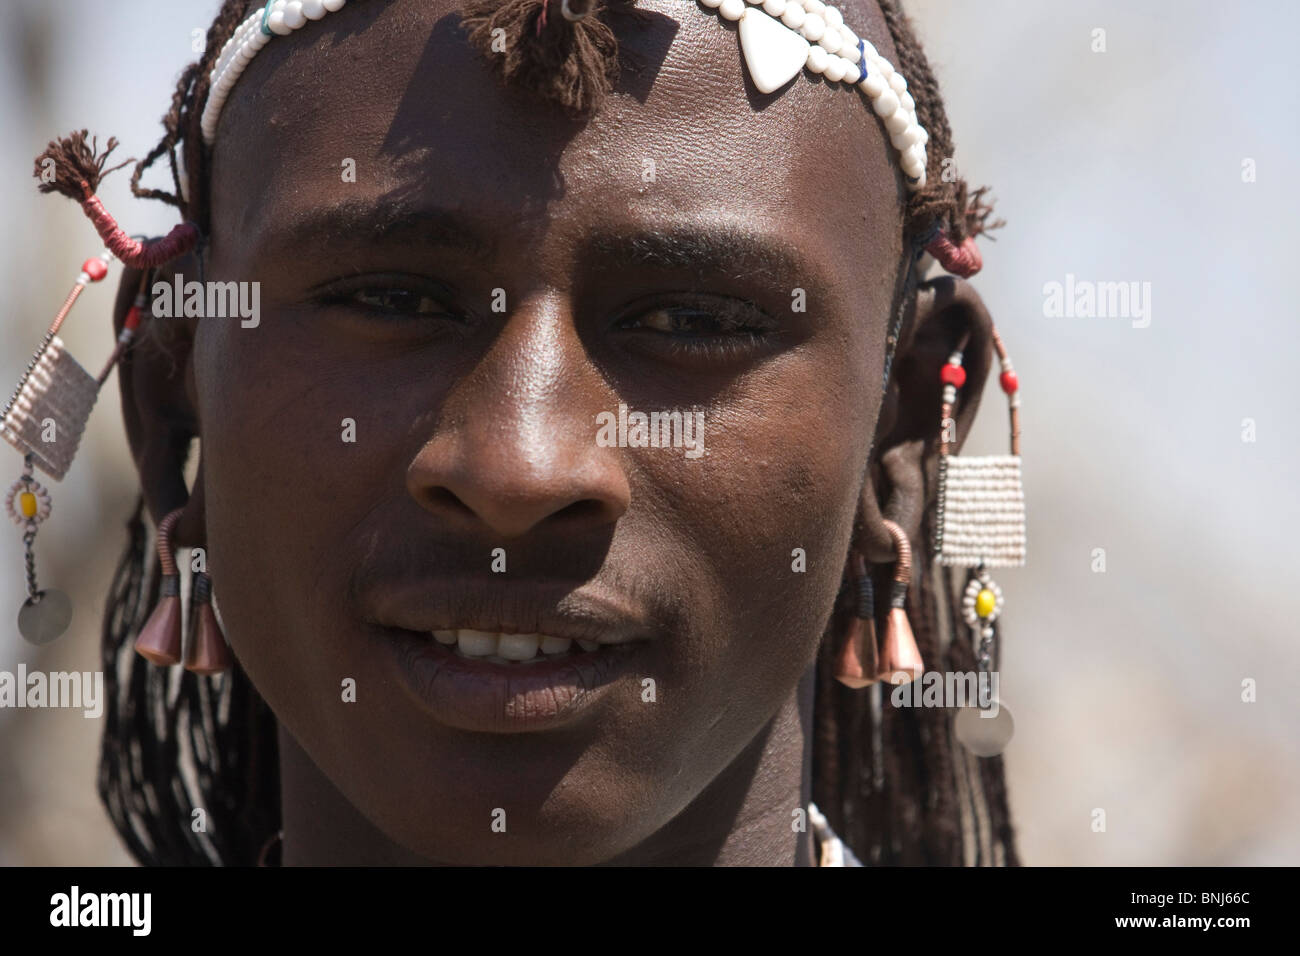 Tansania Afrika Masai Stamm Mann Porträt Gesicht Schmuck einheimischen  einheimischen einheimischen Ureinwohner Stockfotografie - Alamy